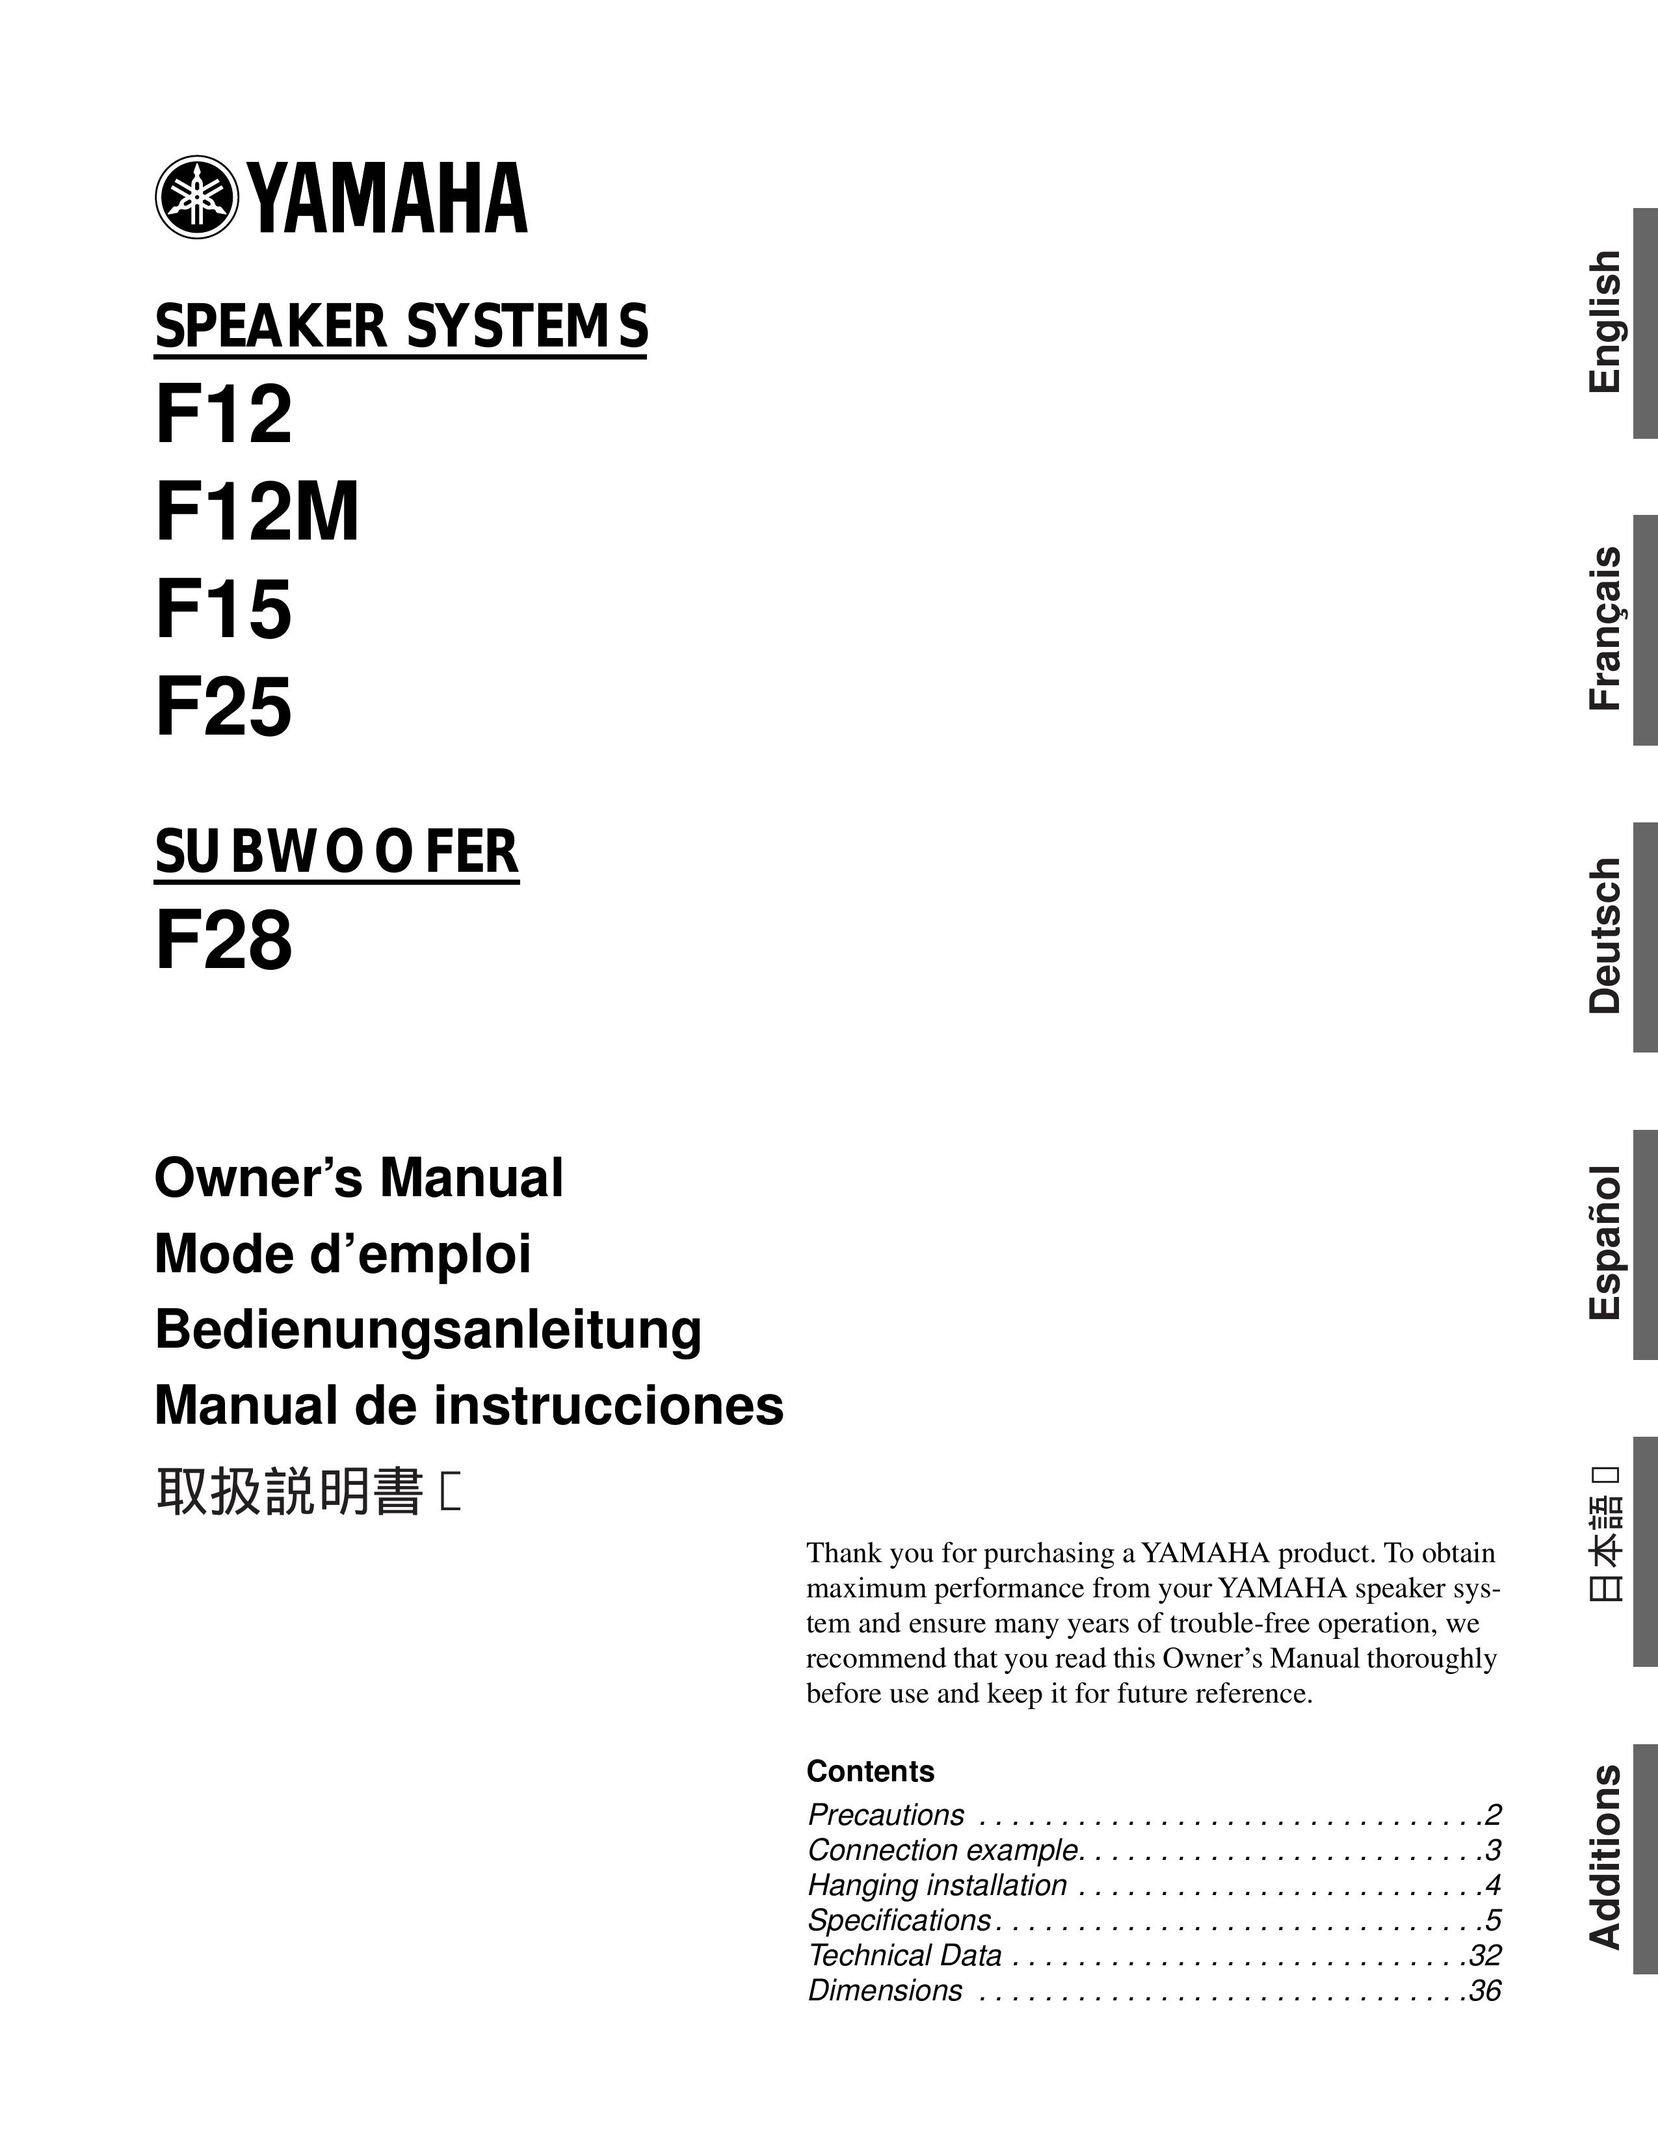 Yamaha F12 Speaker User Manual